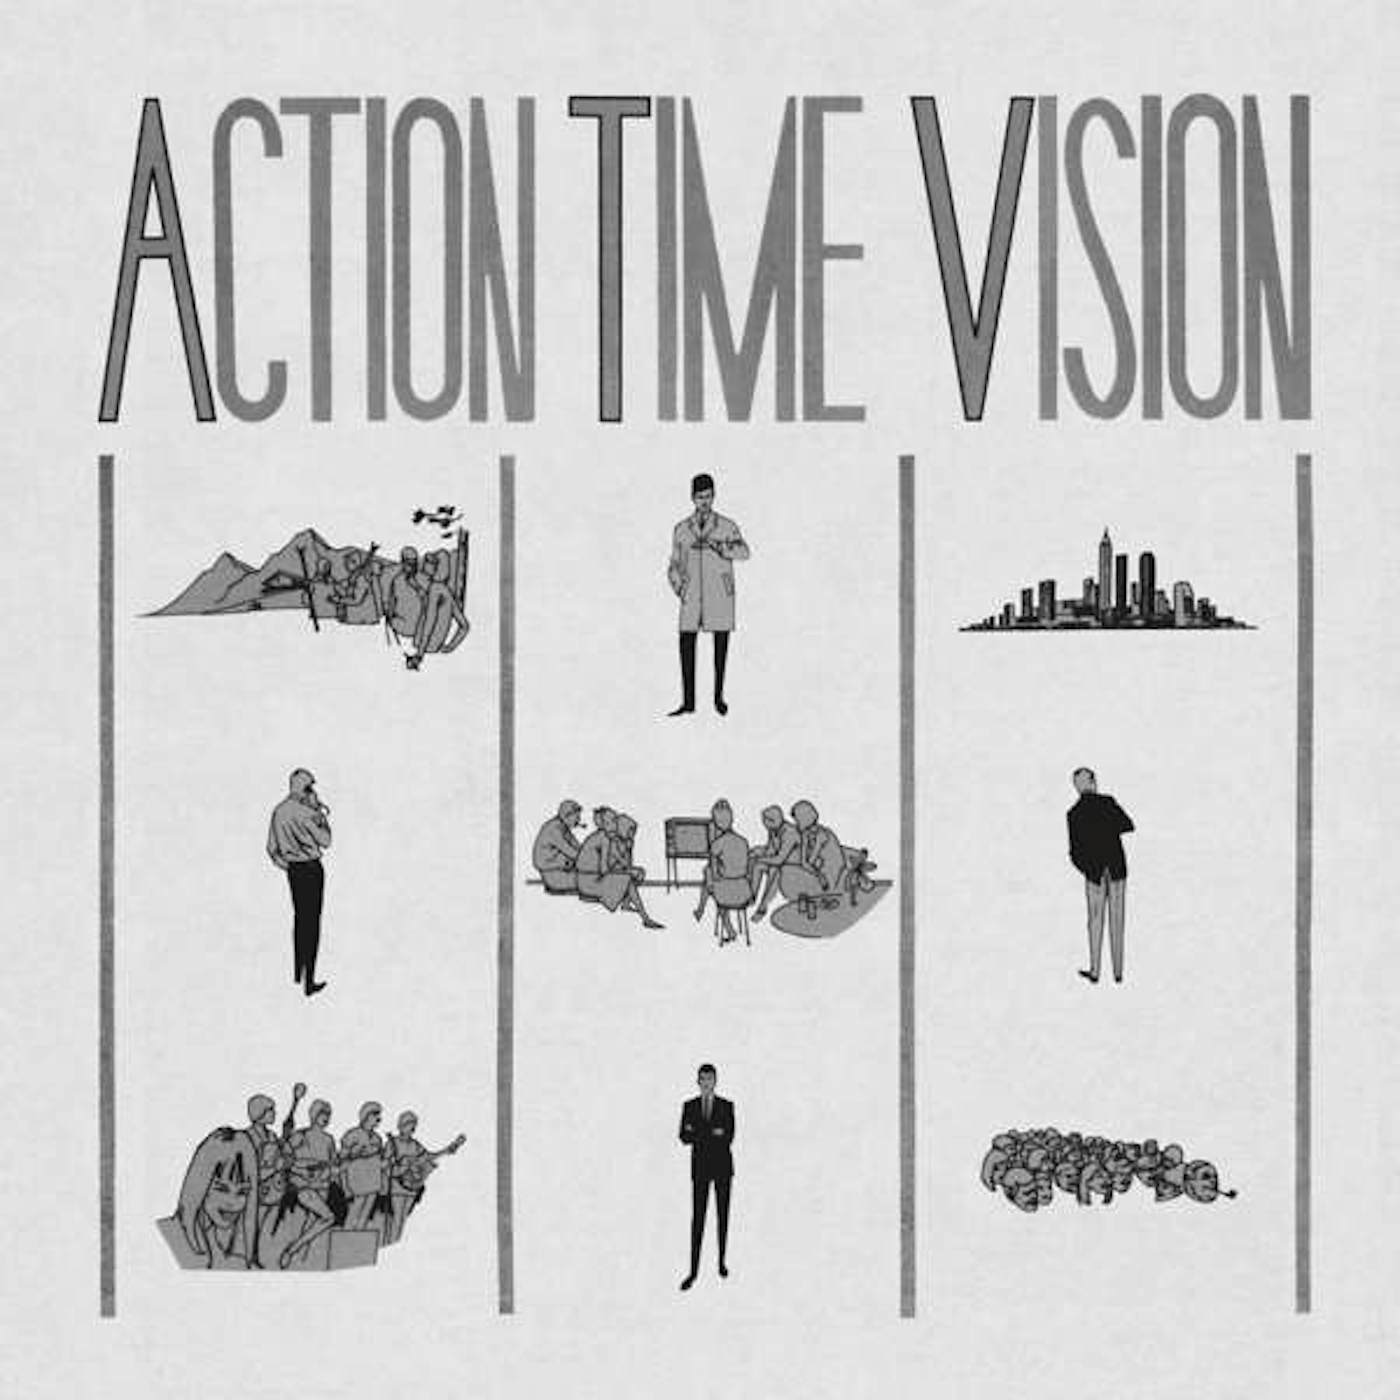 Alternative TV ACTION TIME VISION 1977-1979 Vinyl Record